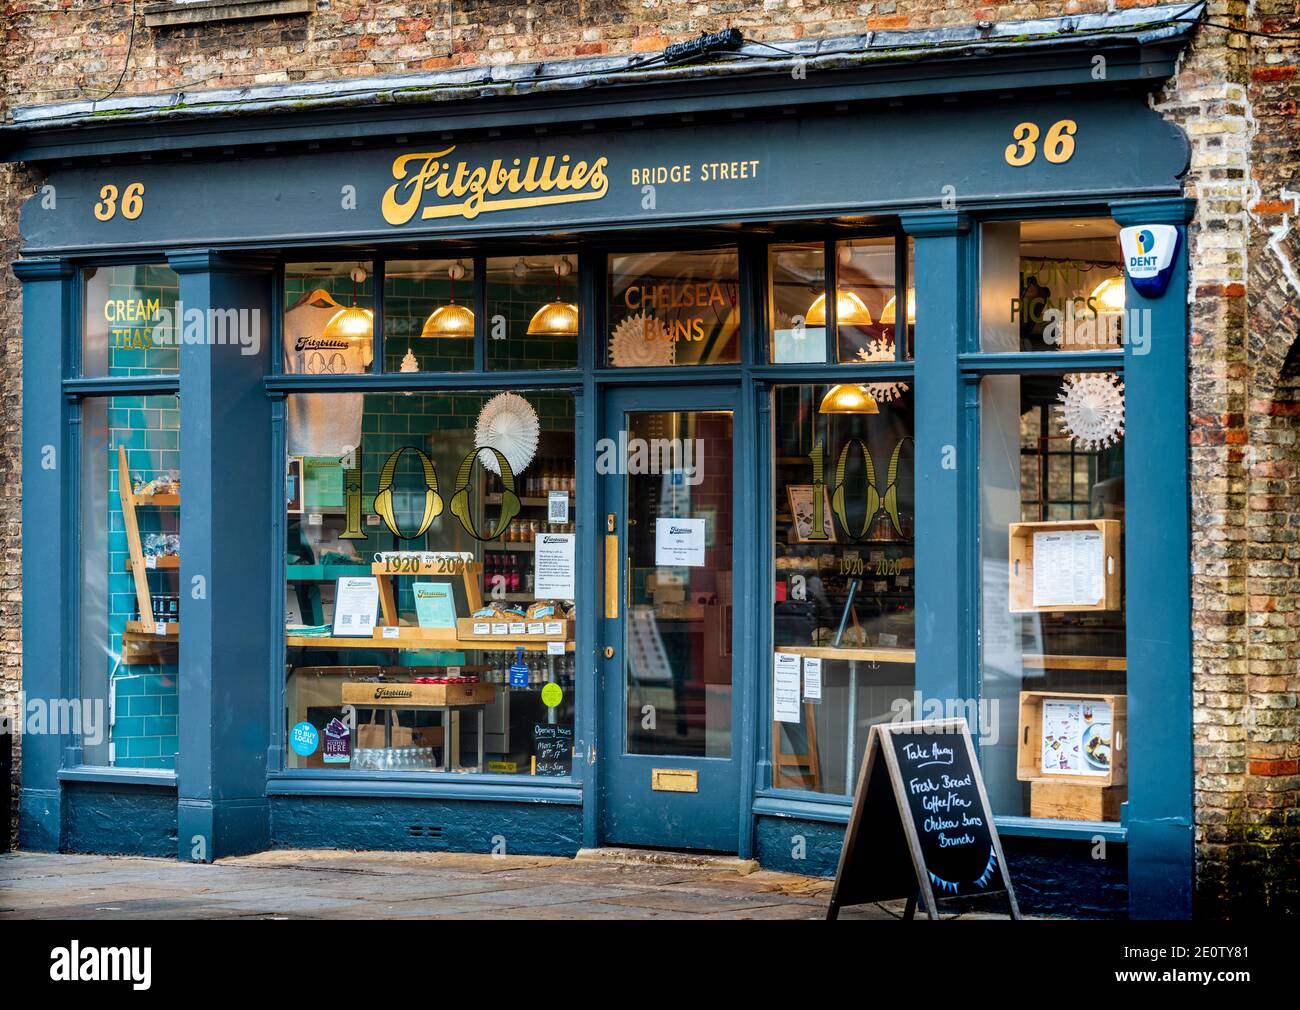 Fitzbillies Cambridge - Fitzbillies Cake Shop e Cafe Bridge Street Cambridge - Fittzbillies è famosa per i suoi bastoncini Sticky Chelsea Foto Stock